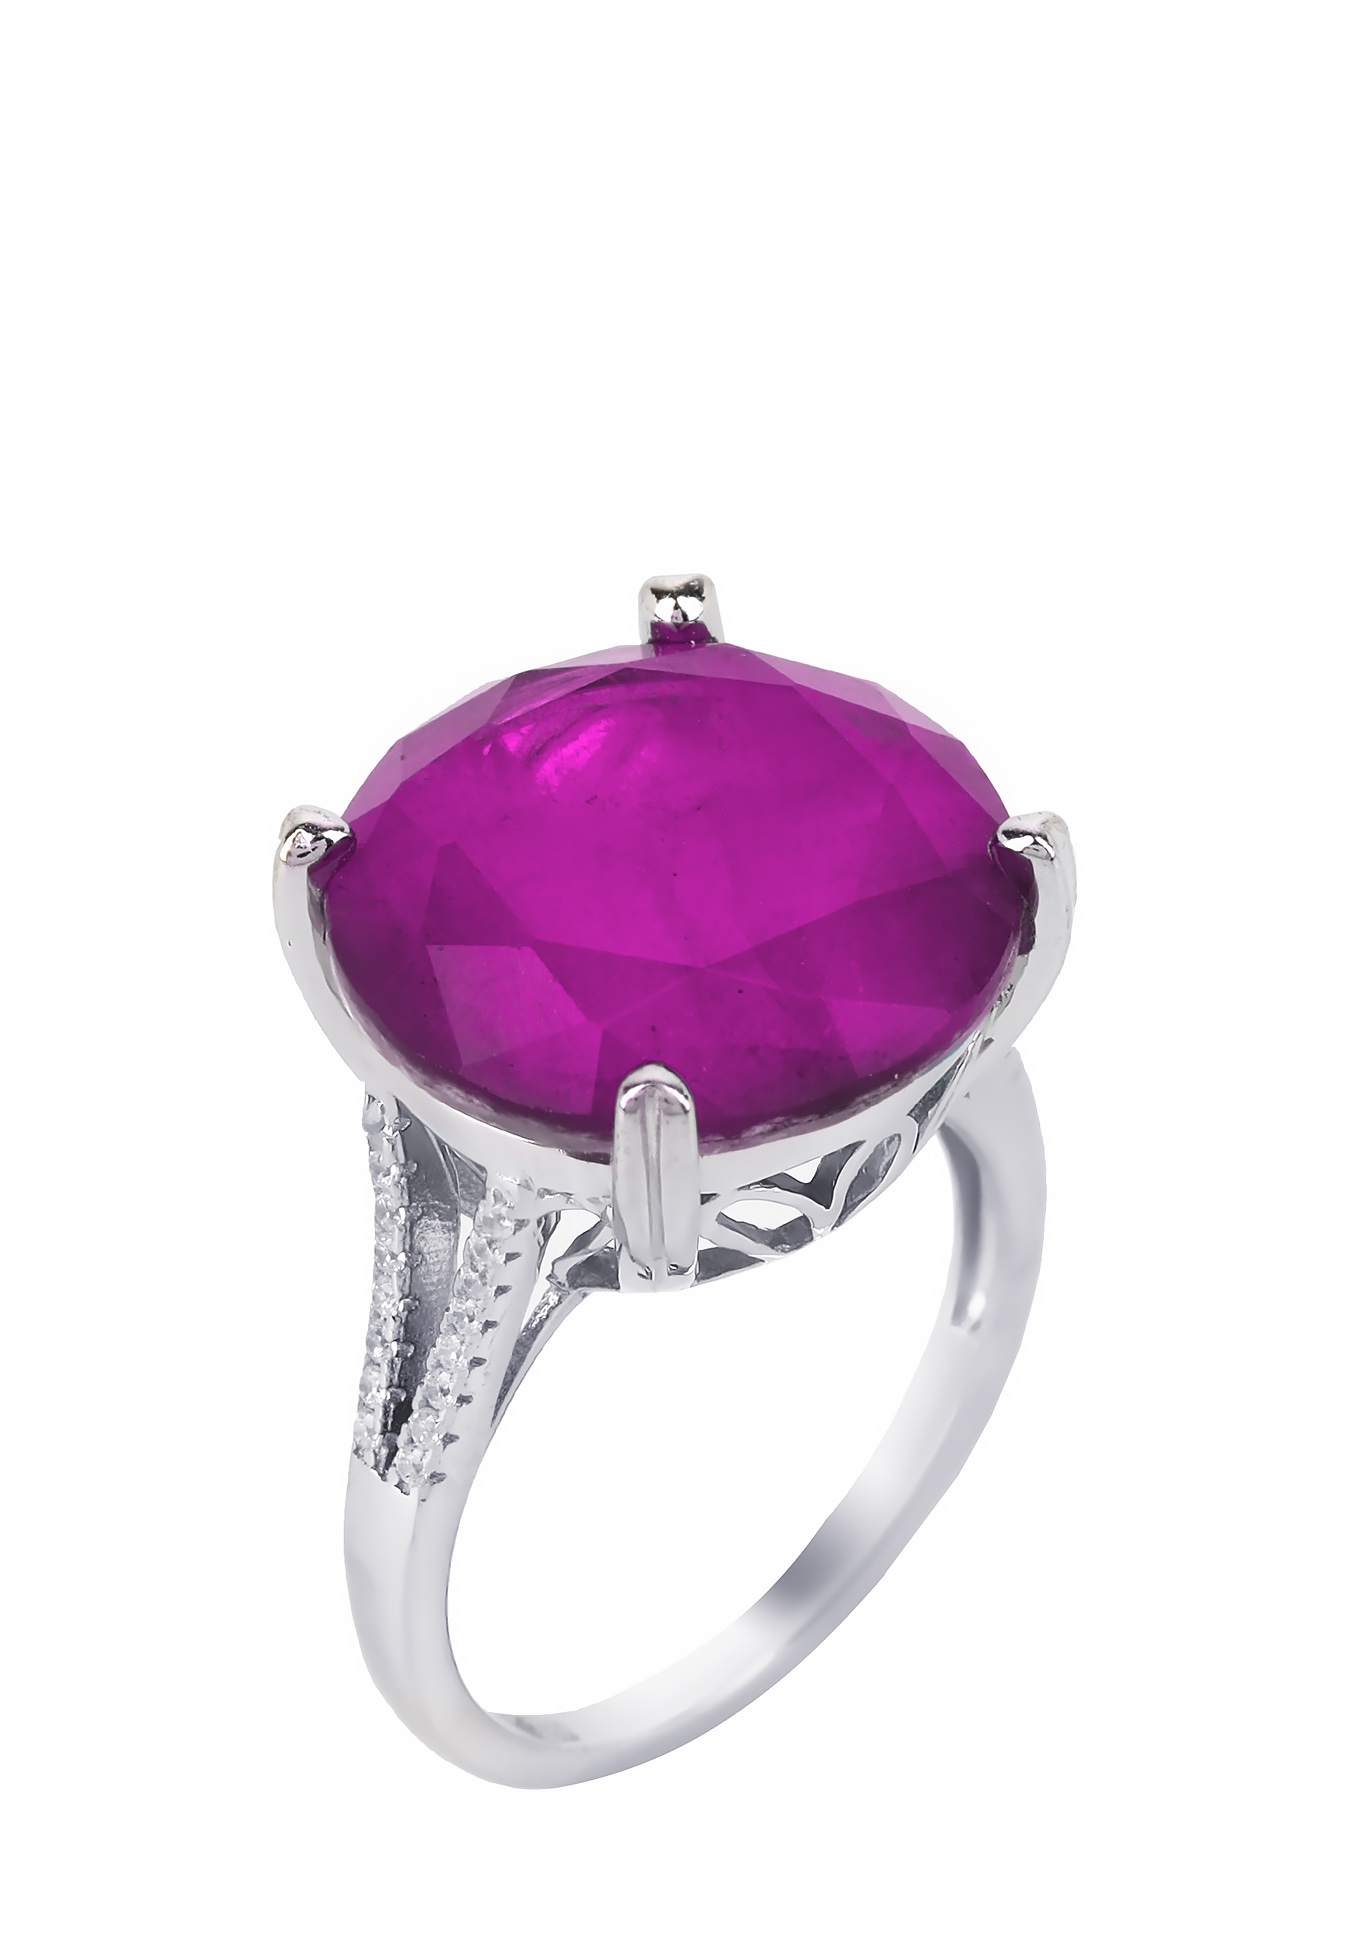 Кольцо серебряное "Леди" Fresh Jewelry, размер 19, цвет сиреневый солитер, сплит шенк - фото 1